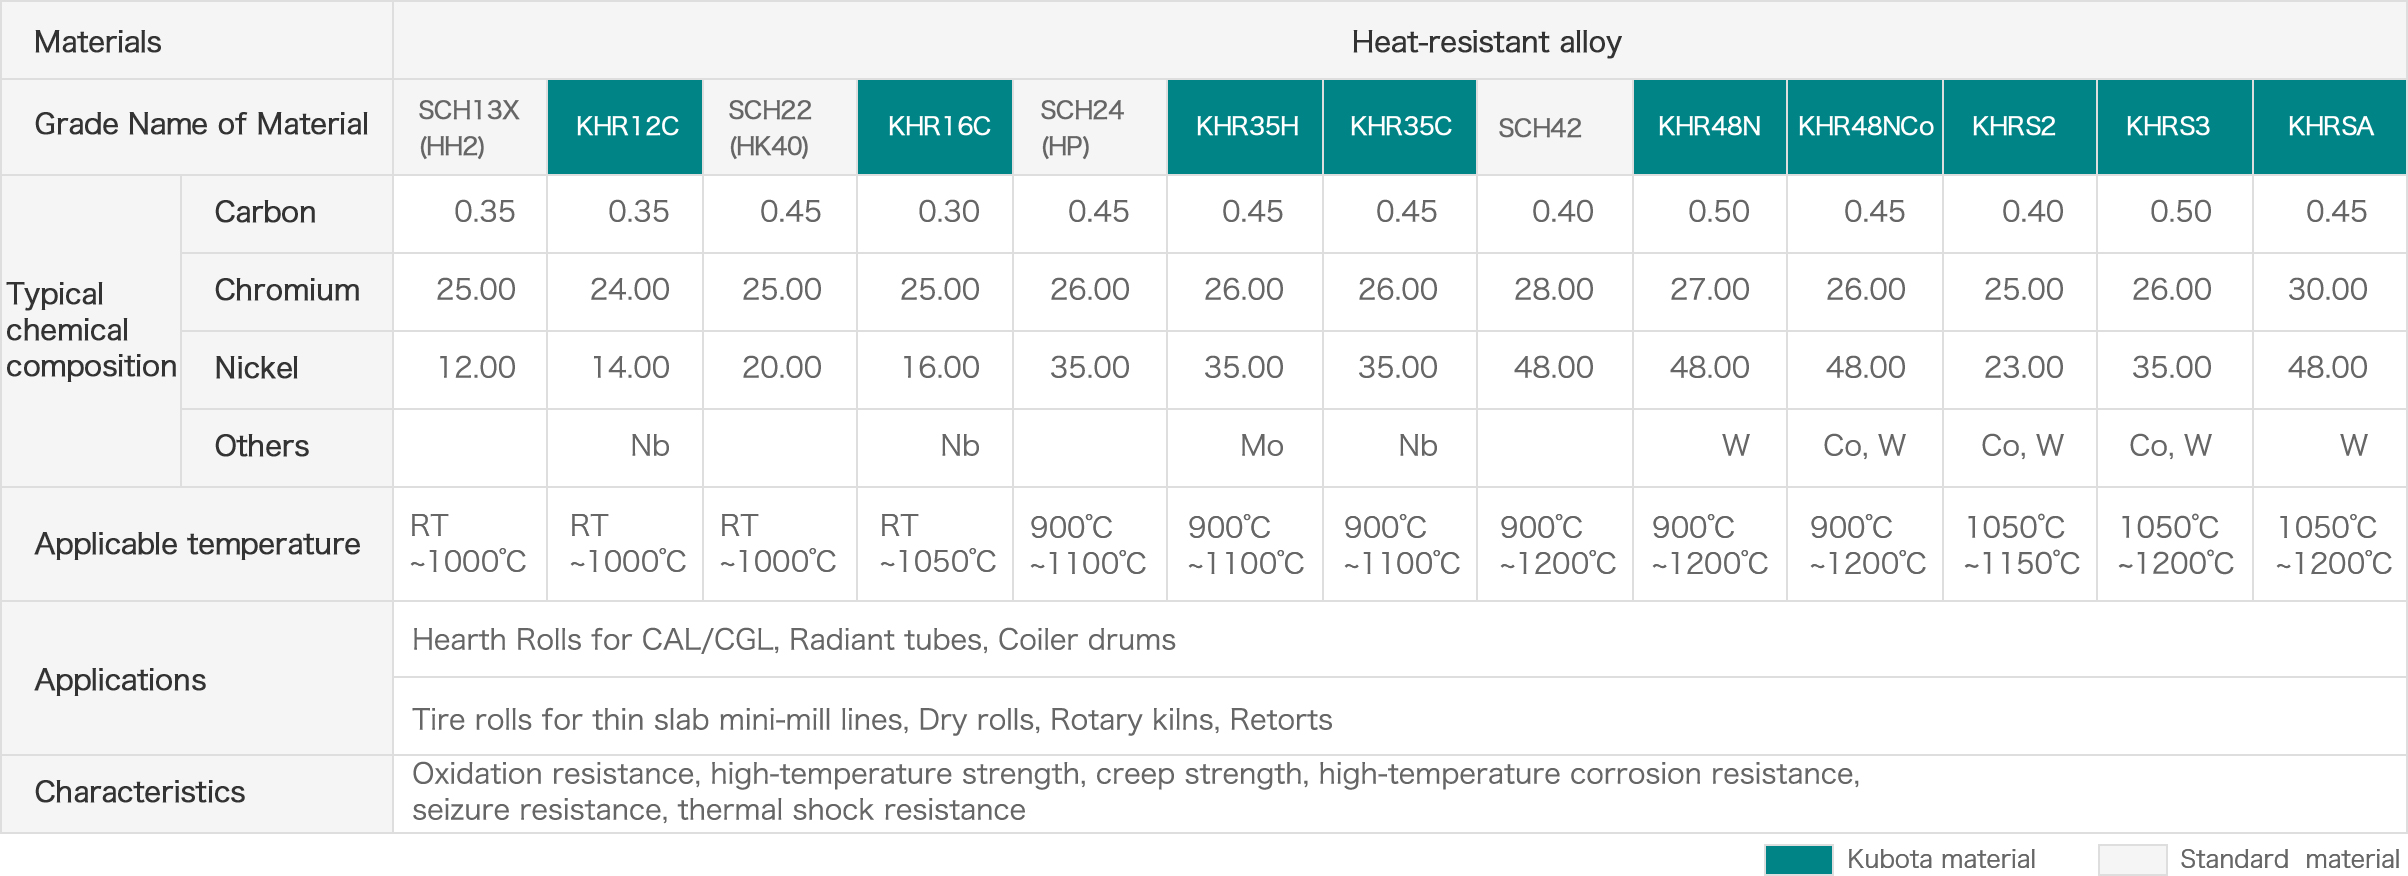 Heat-resistant alloy